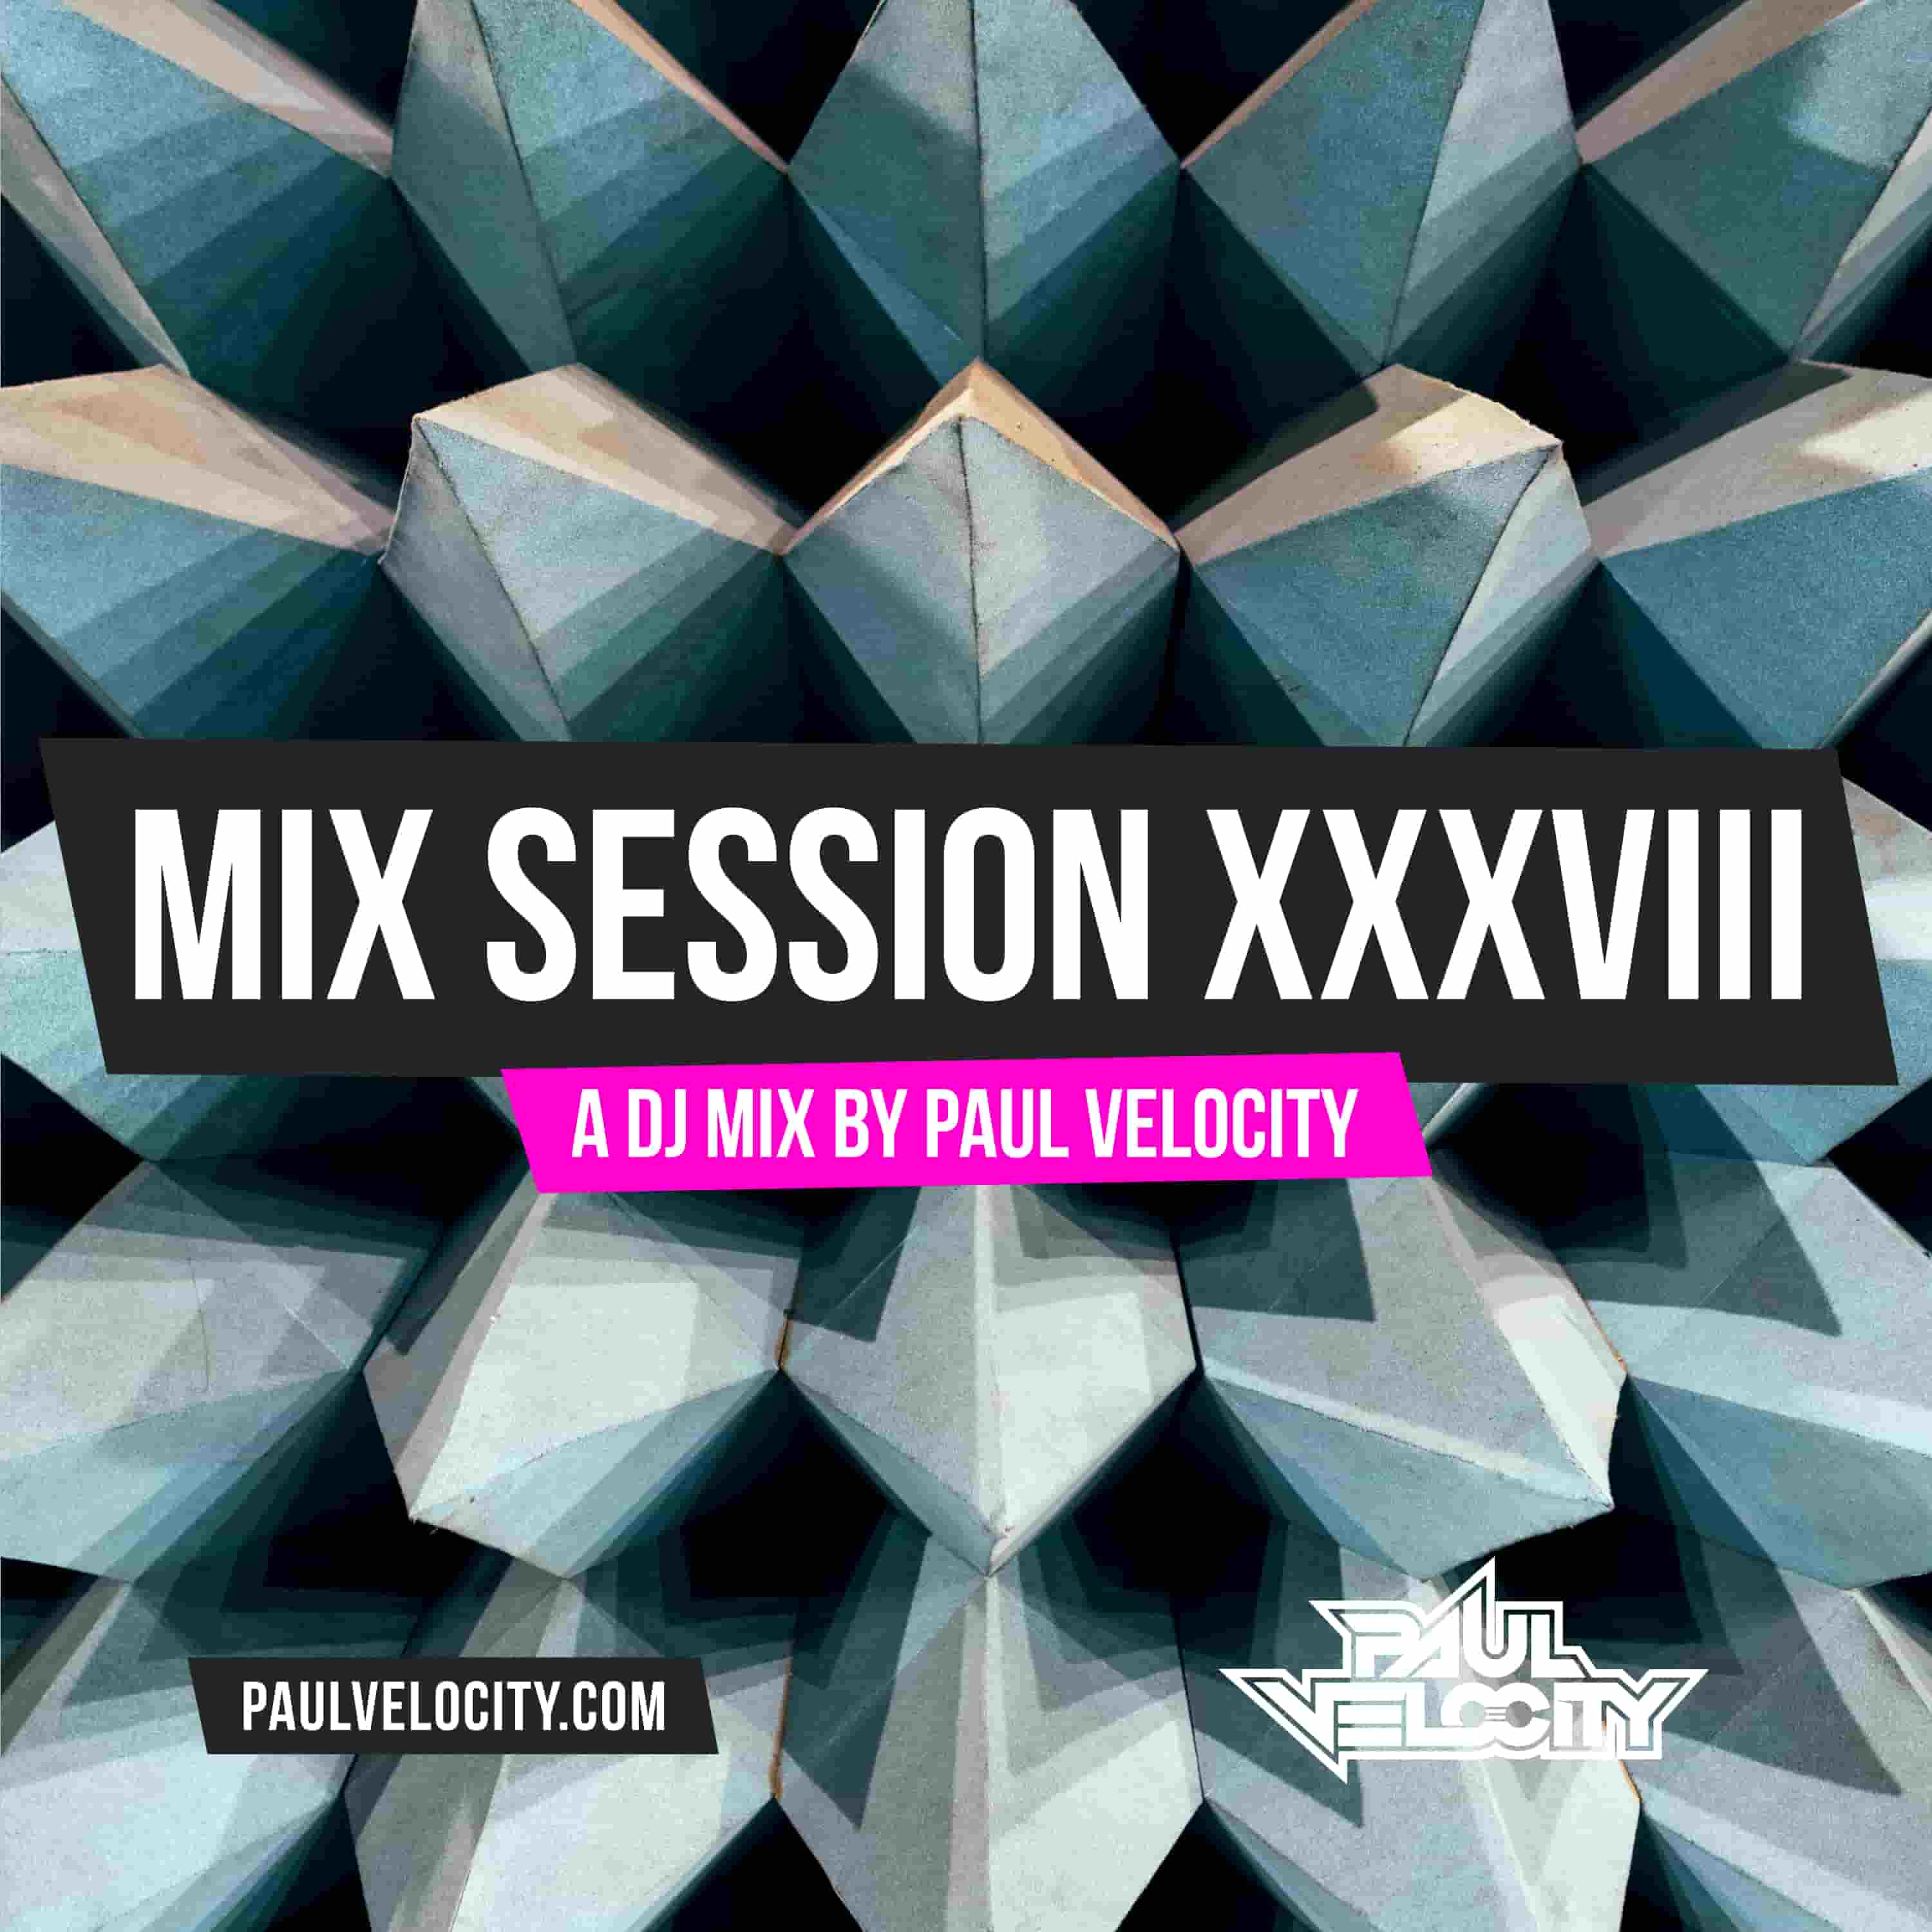 Mix Session XXXVIII